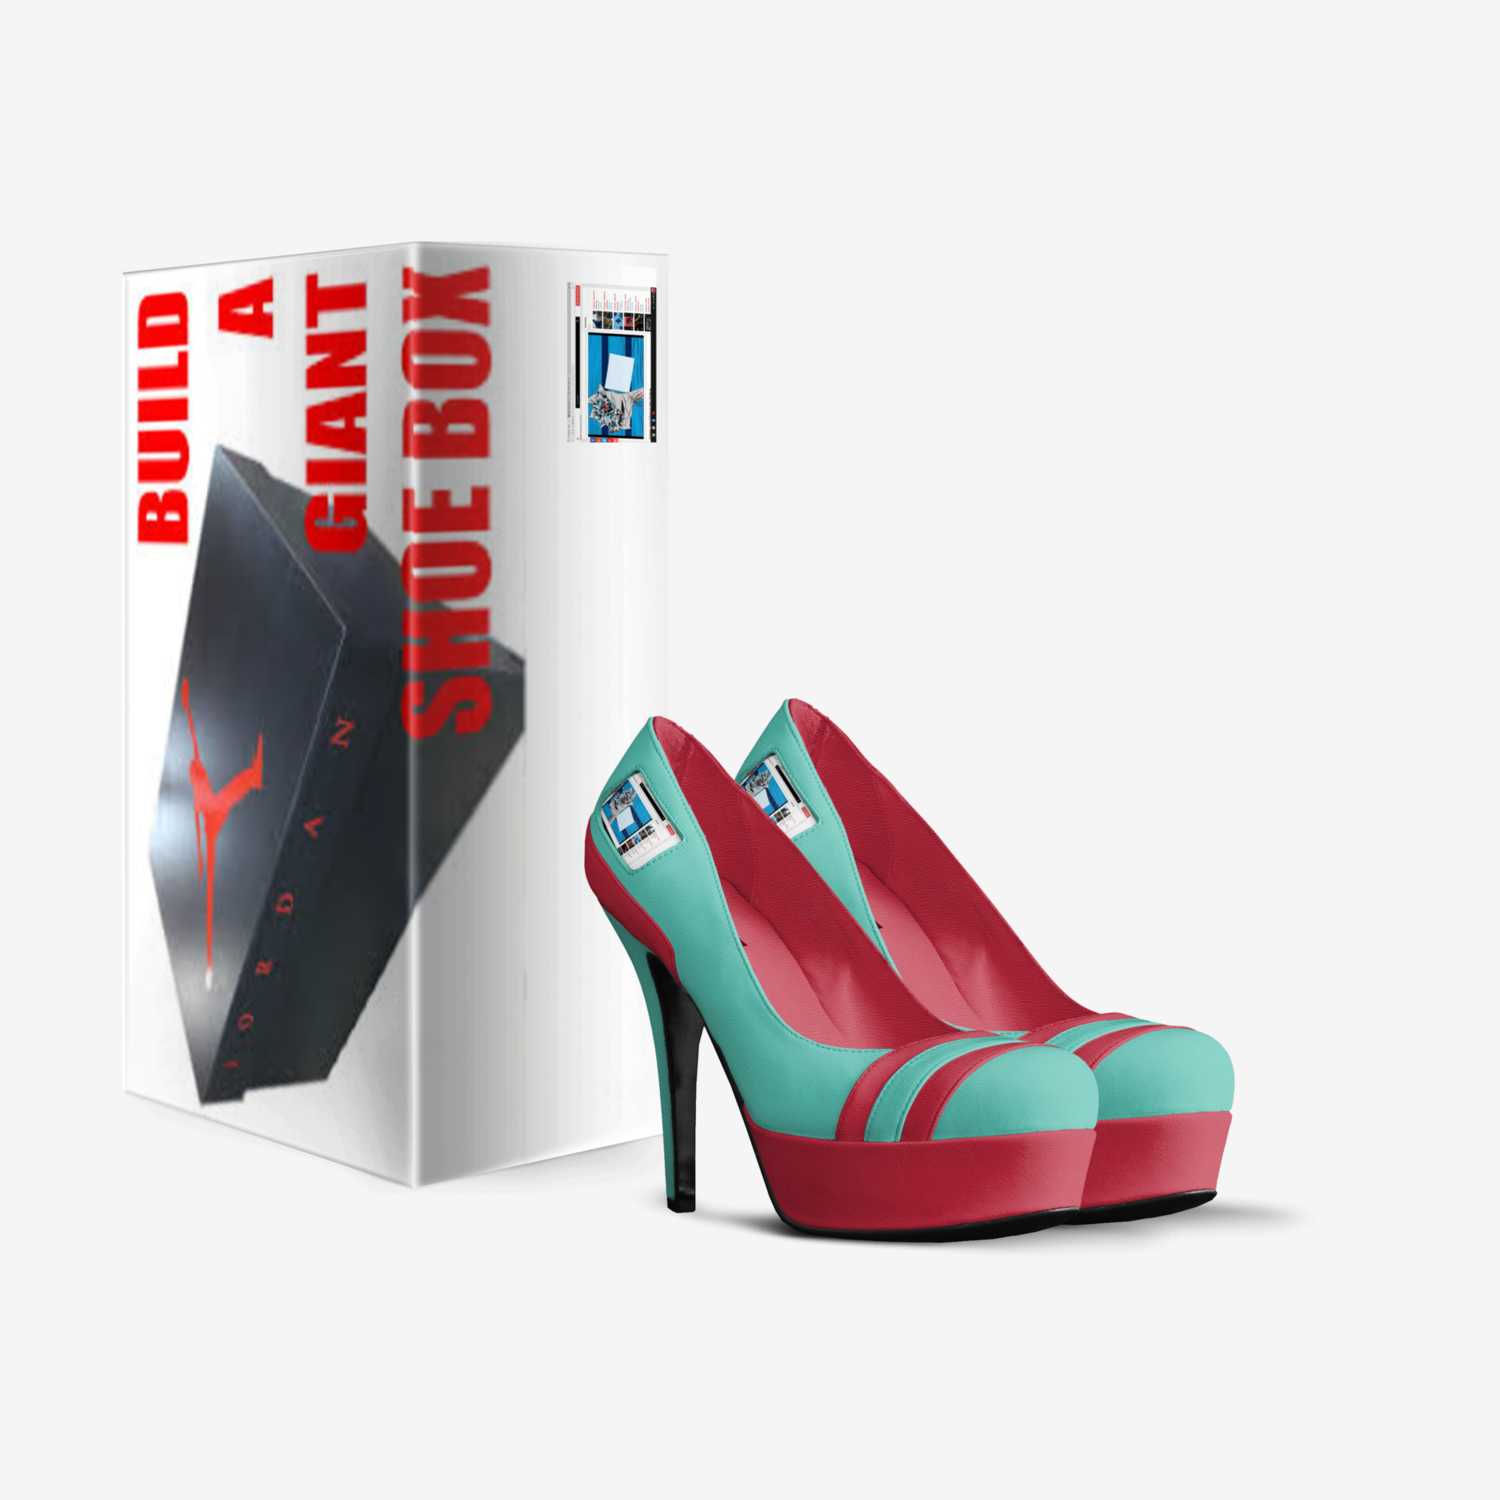 inter custom made in Italy shoes by Katrina Harry | Box view